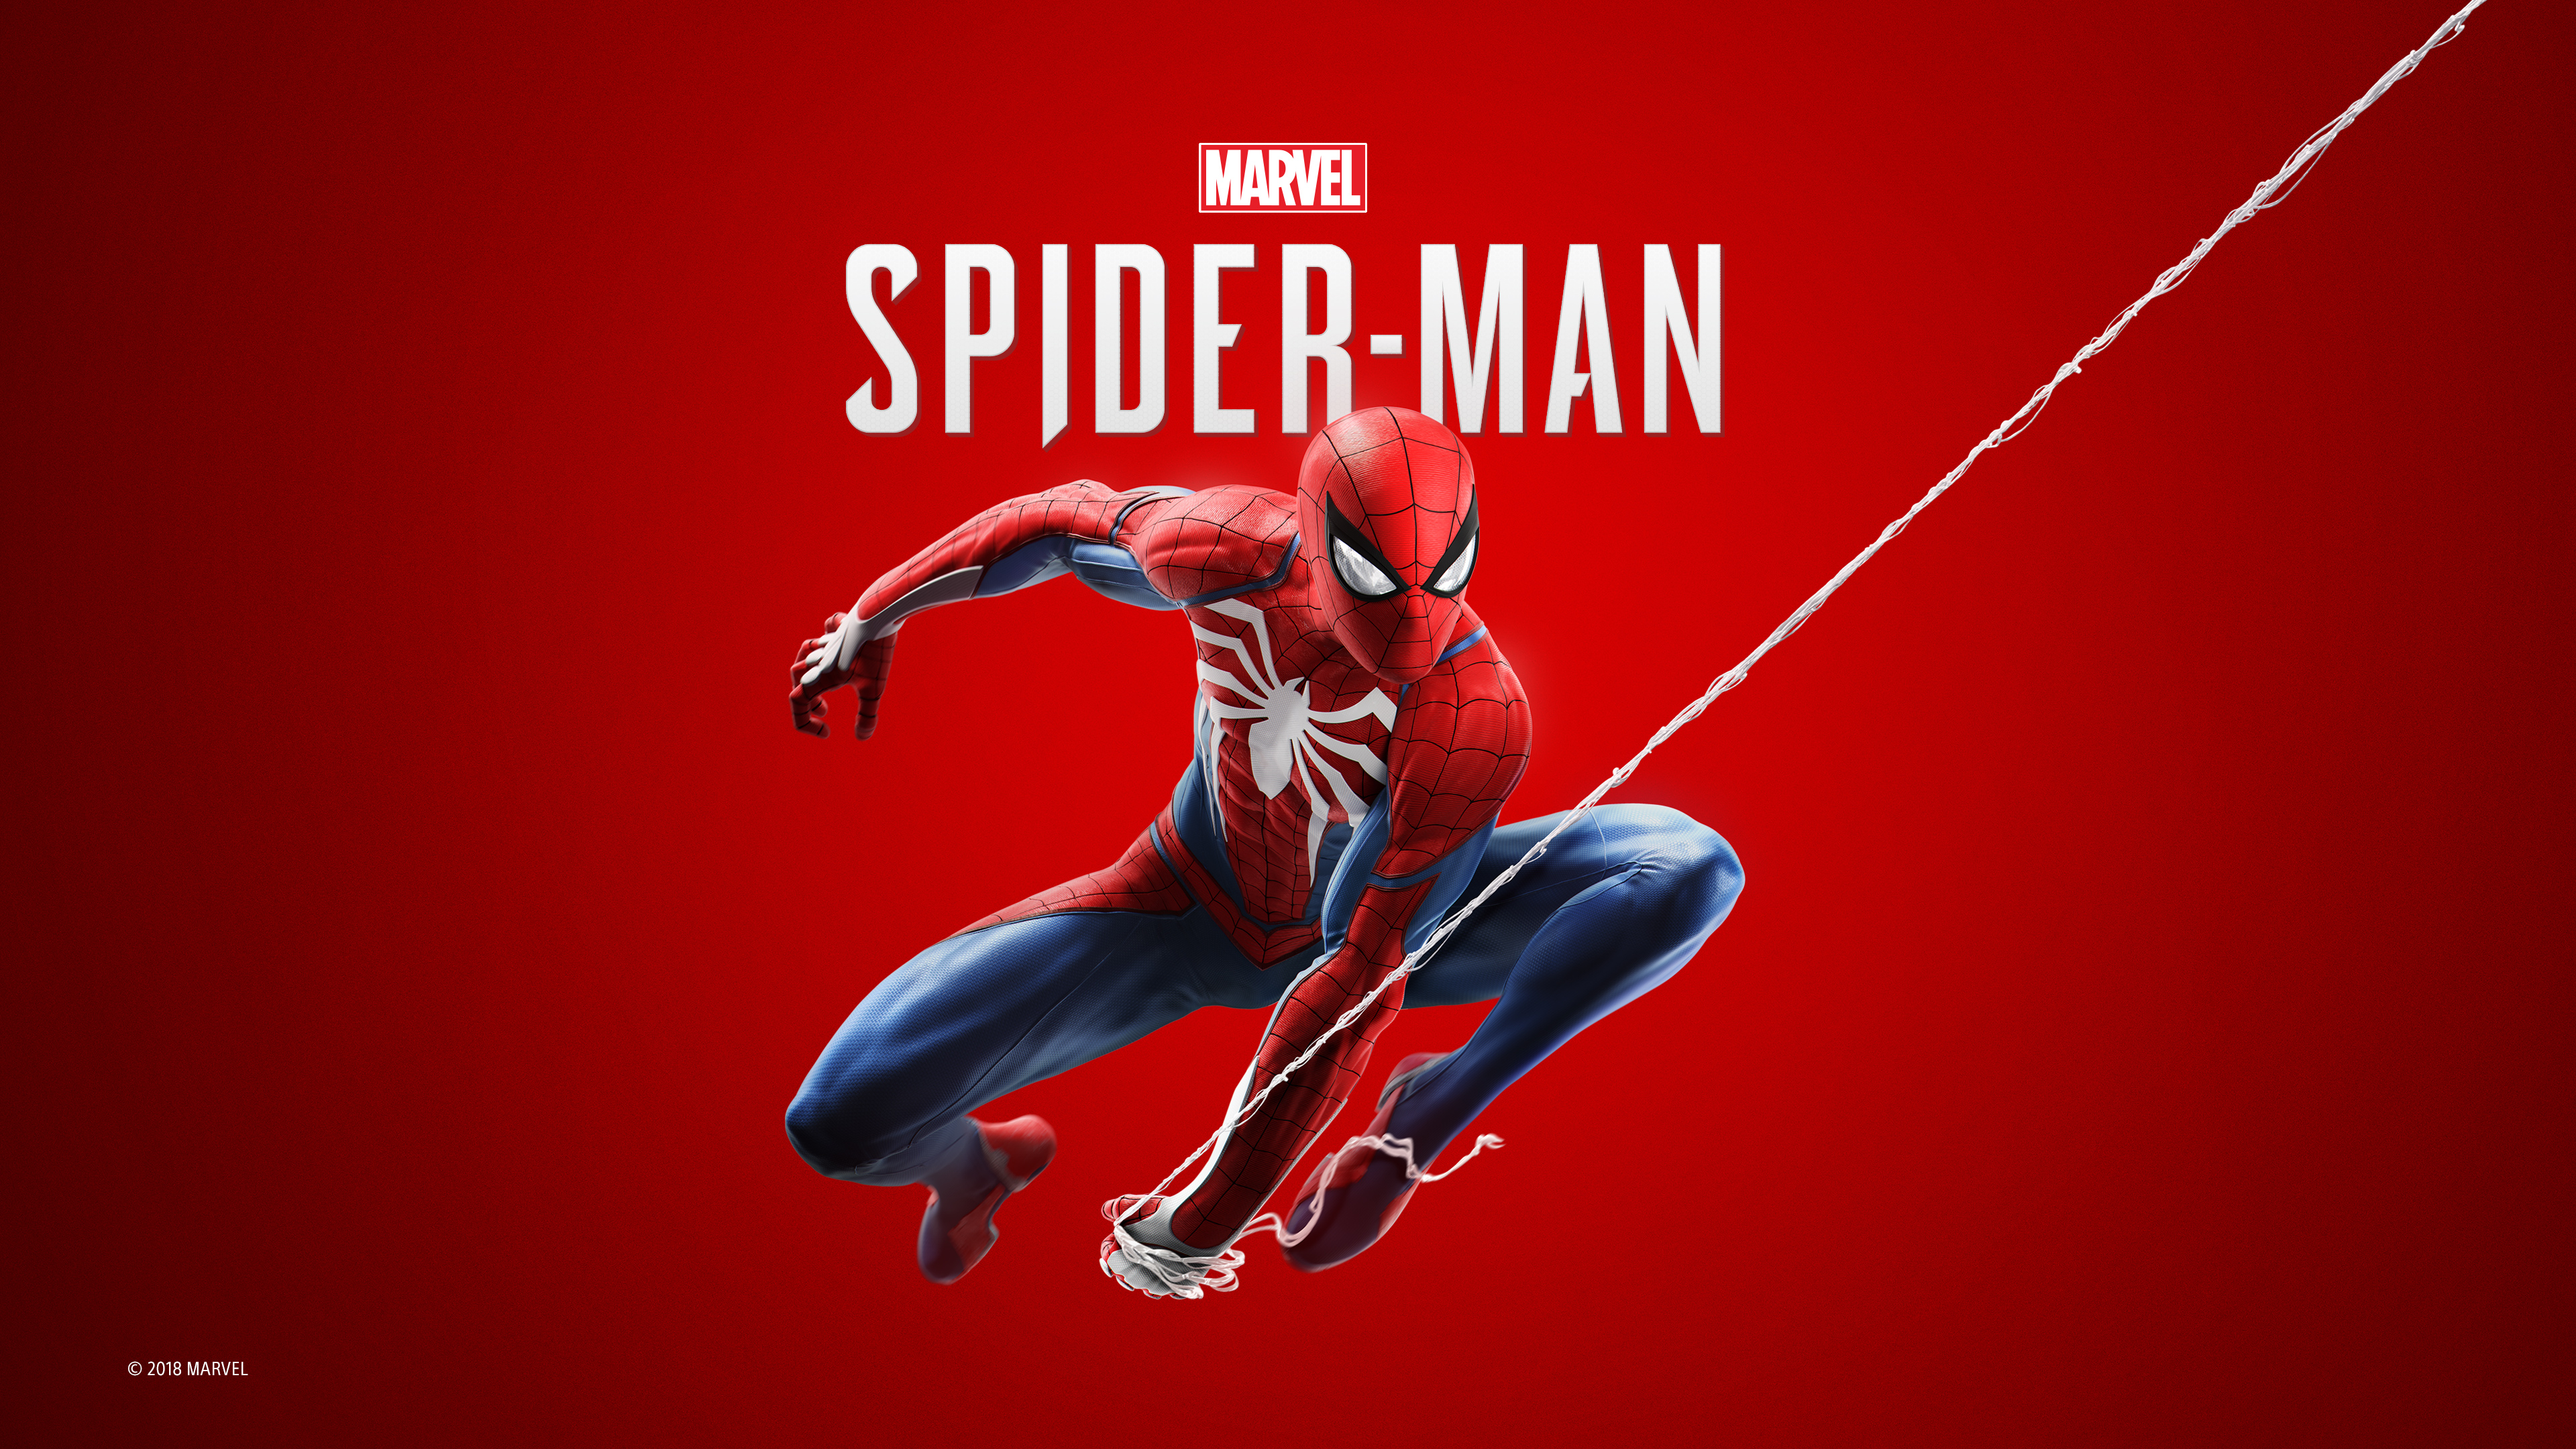 Spider Man Ps4 4k Ultra HD Wallpaper Background Image